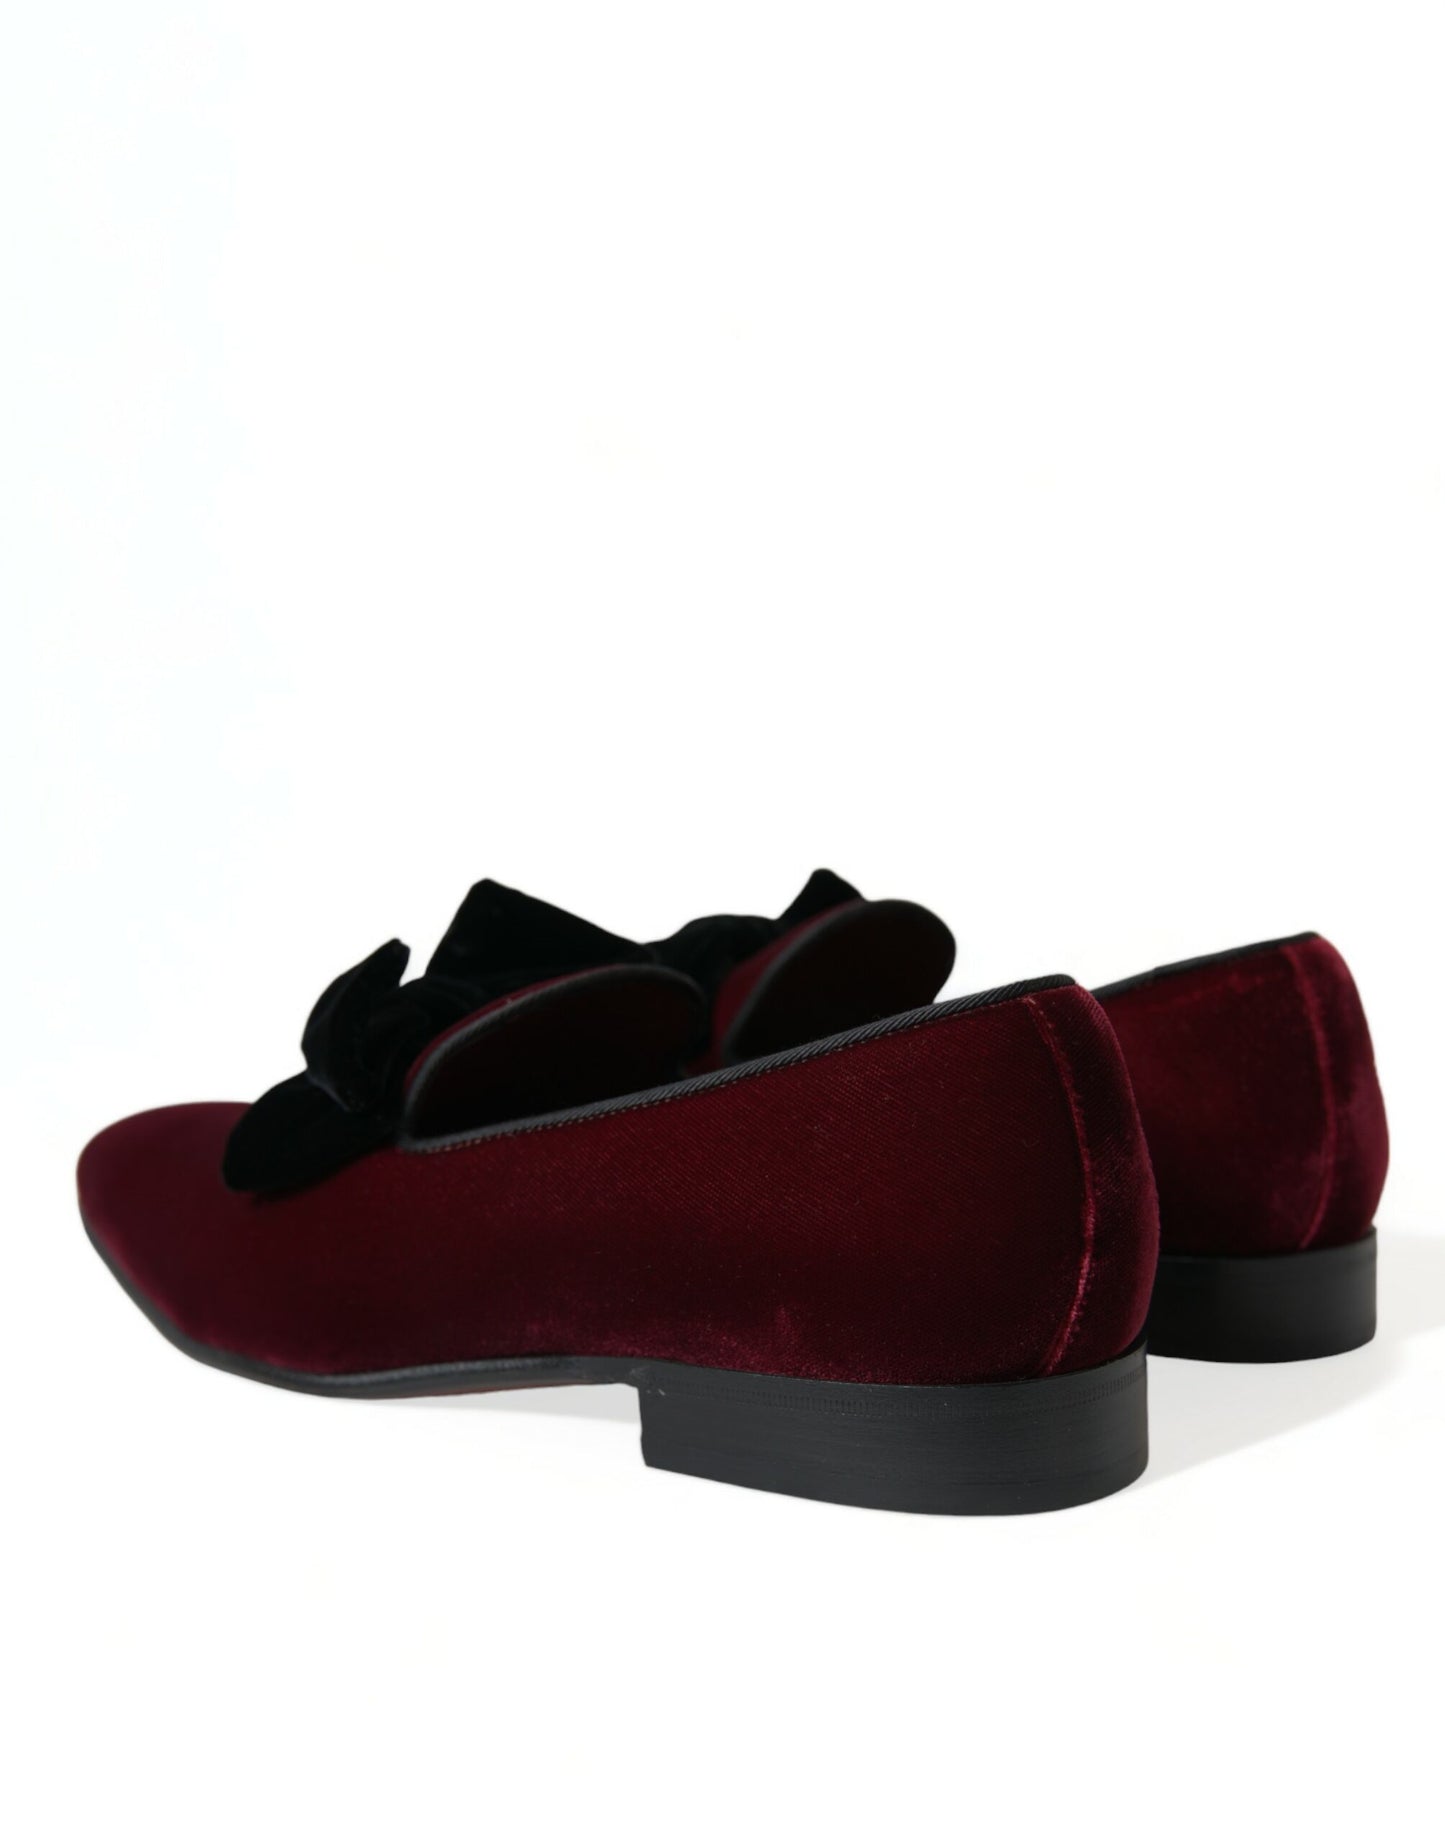 Dolce & Gabbana Burgundy Velvet Loafers - Elegance with a Twist - DEA STILOSA MILANO